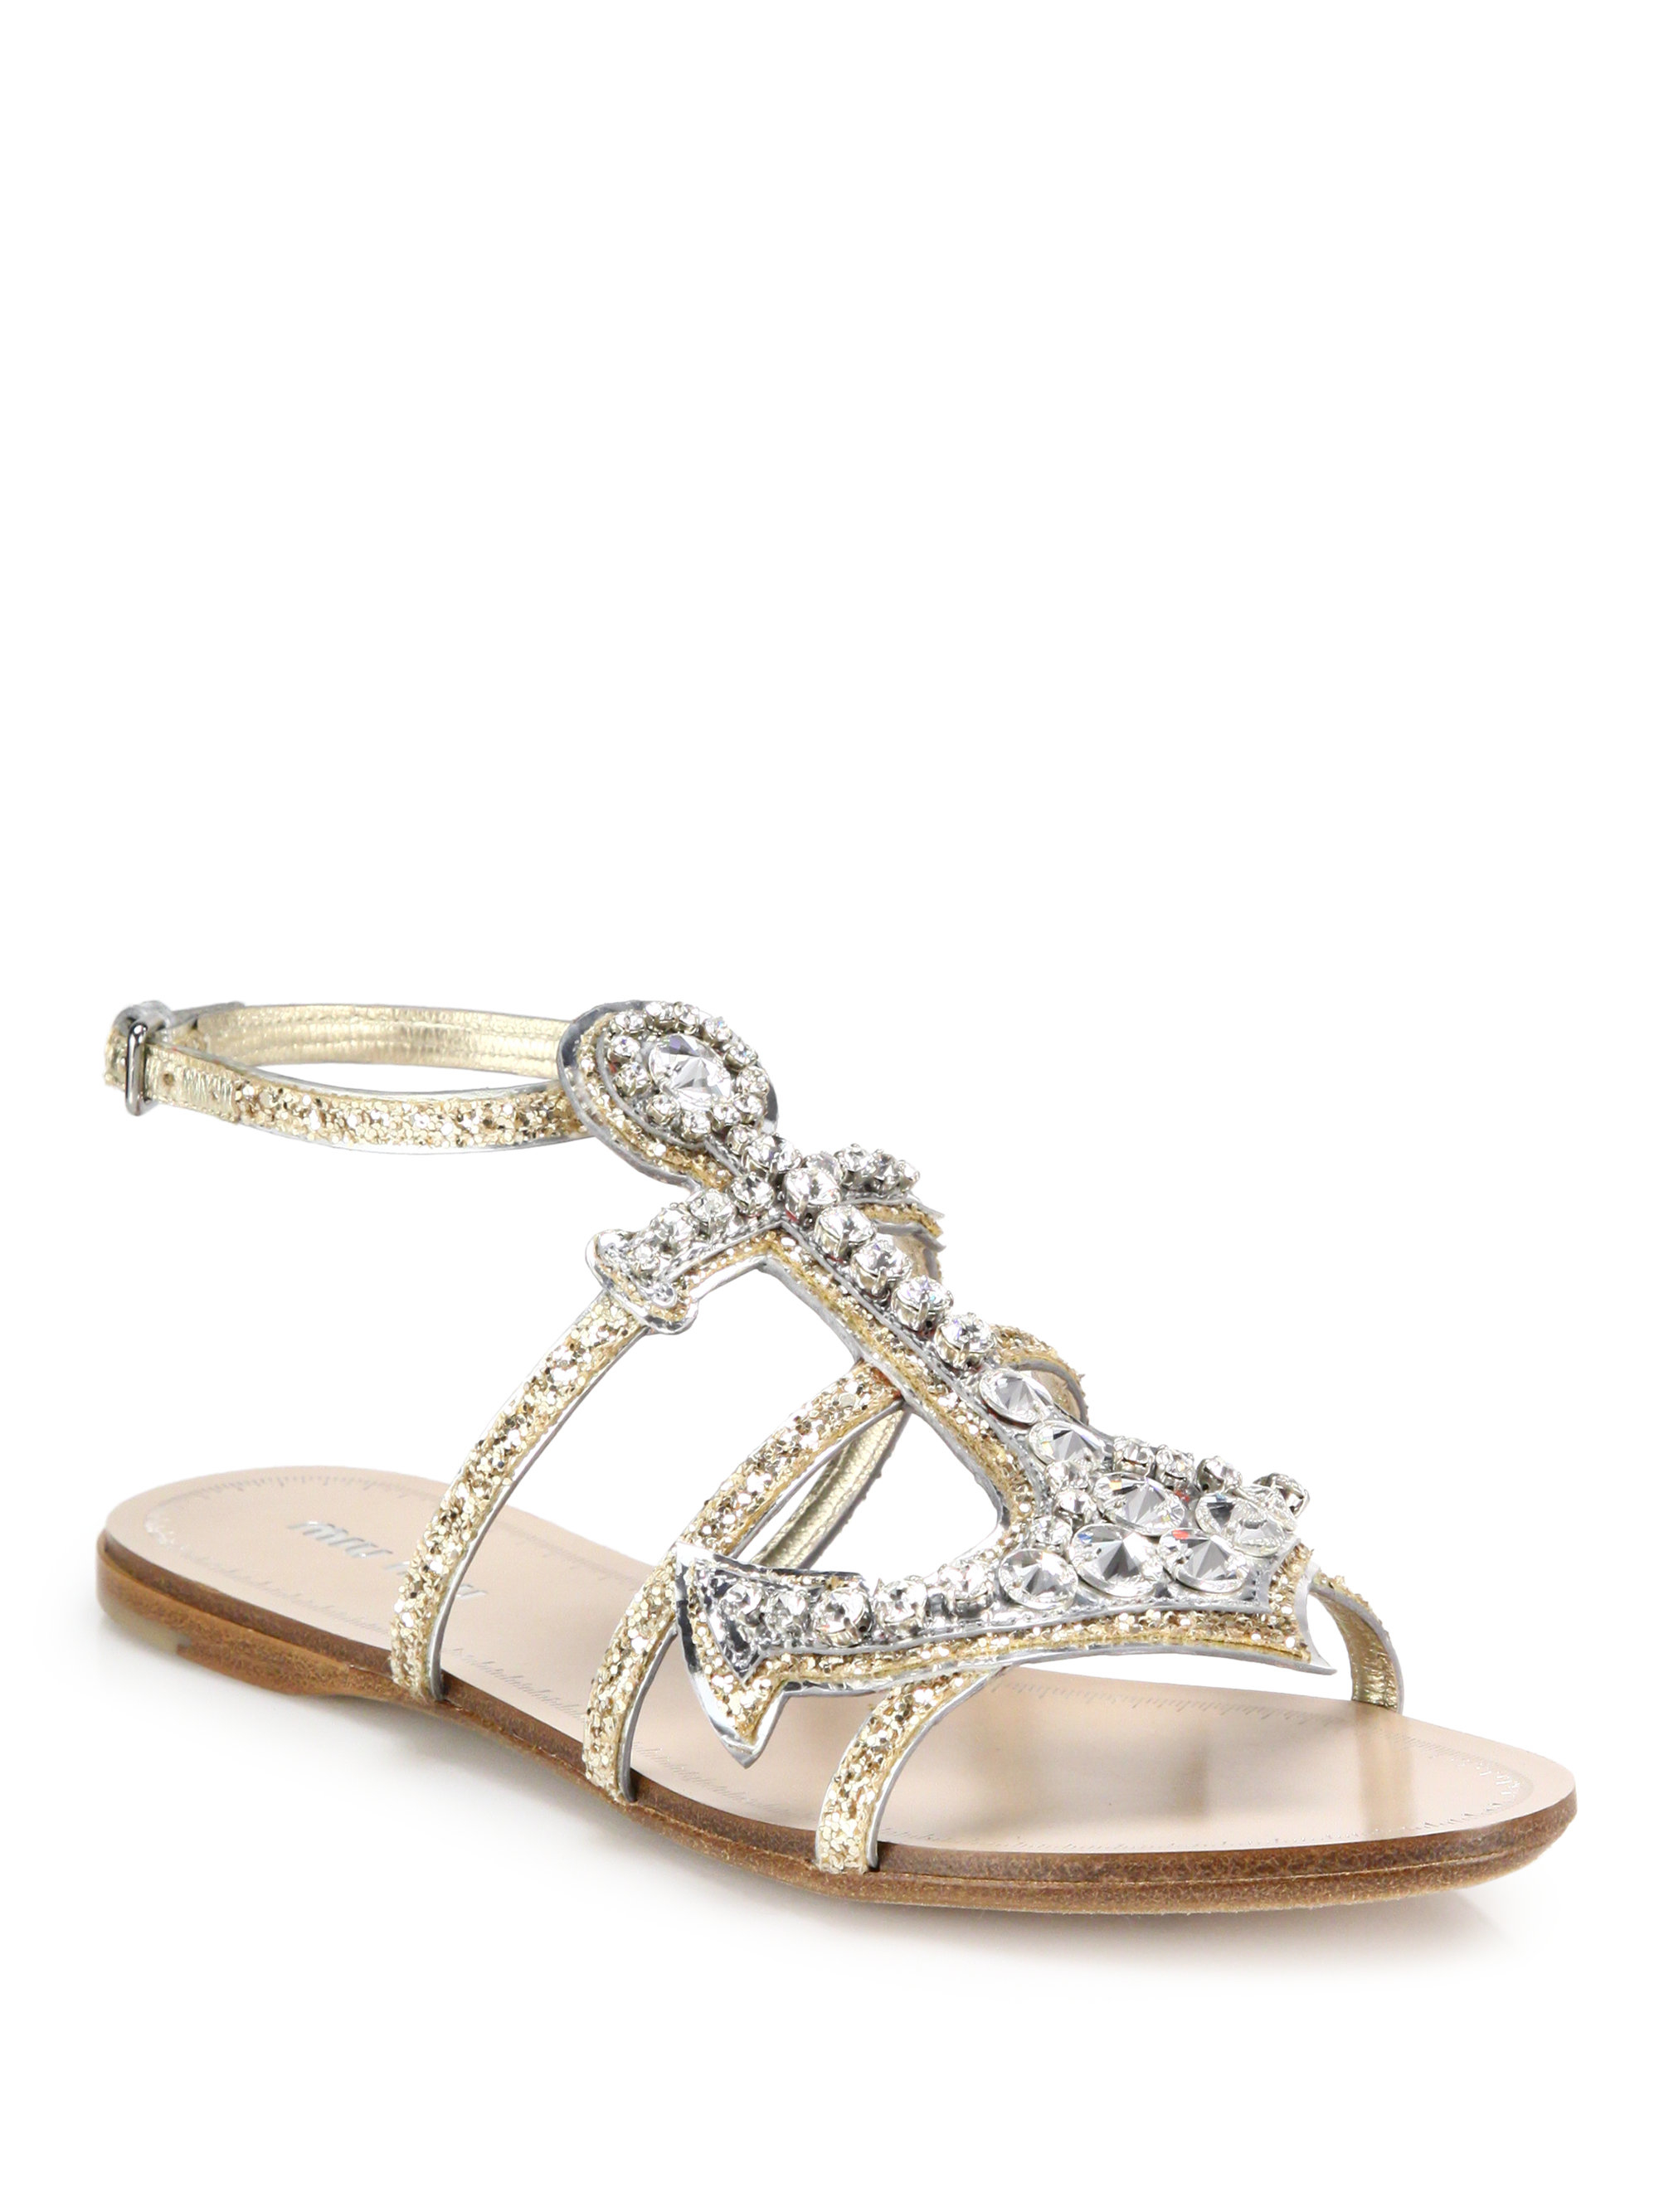 Miu Miu Leather Anchor Crystal Flat Sandals in Silver (Metallic) - Lyst